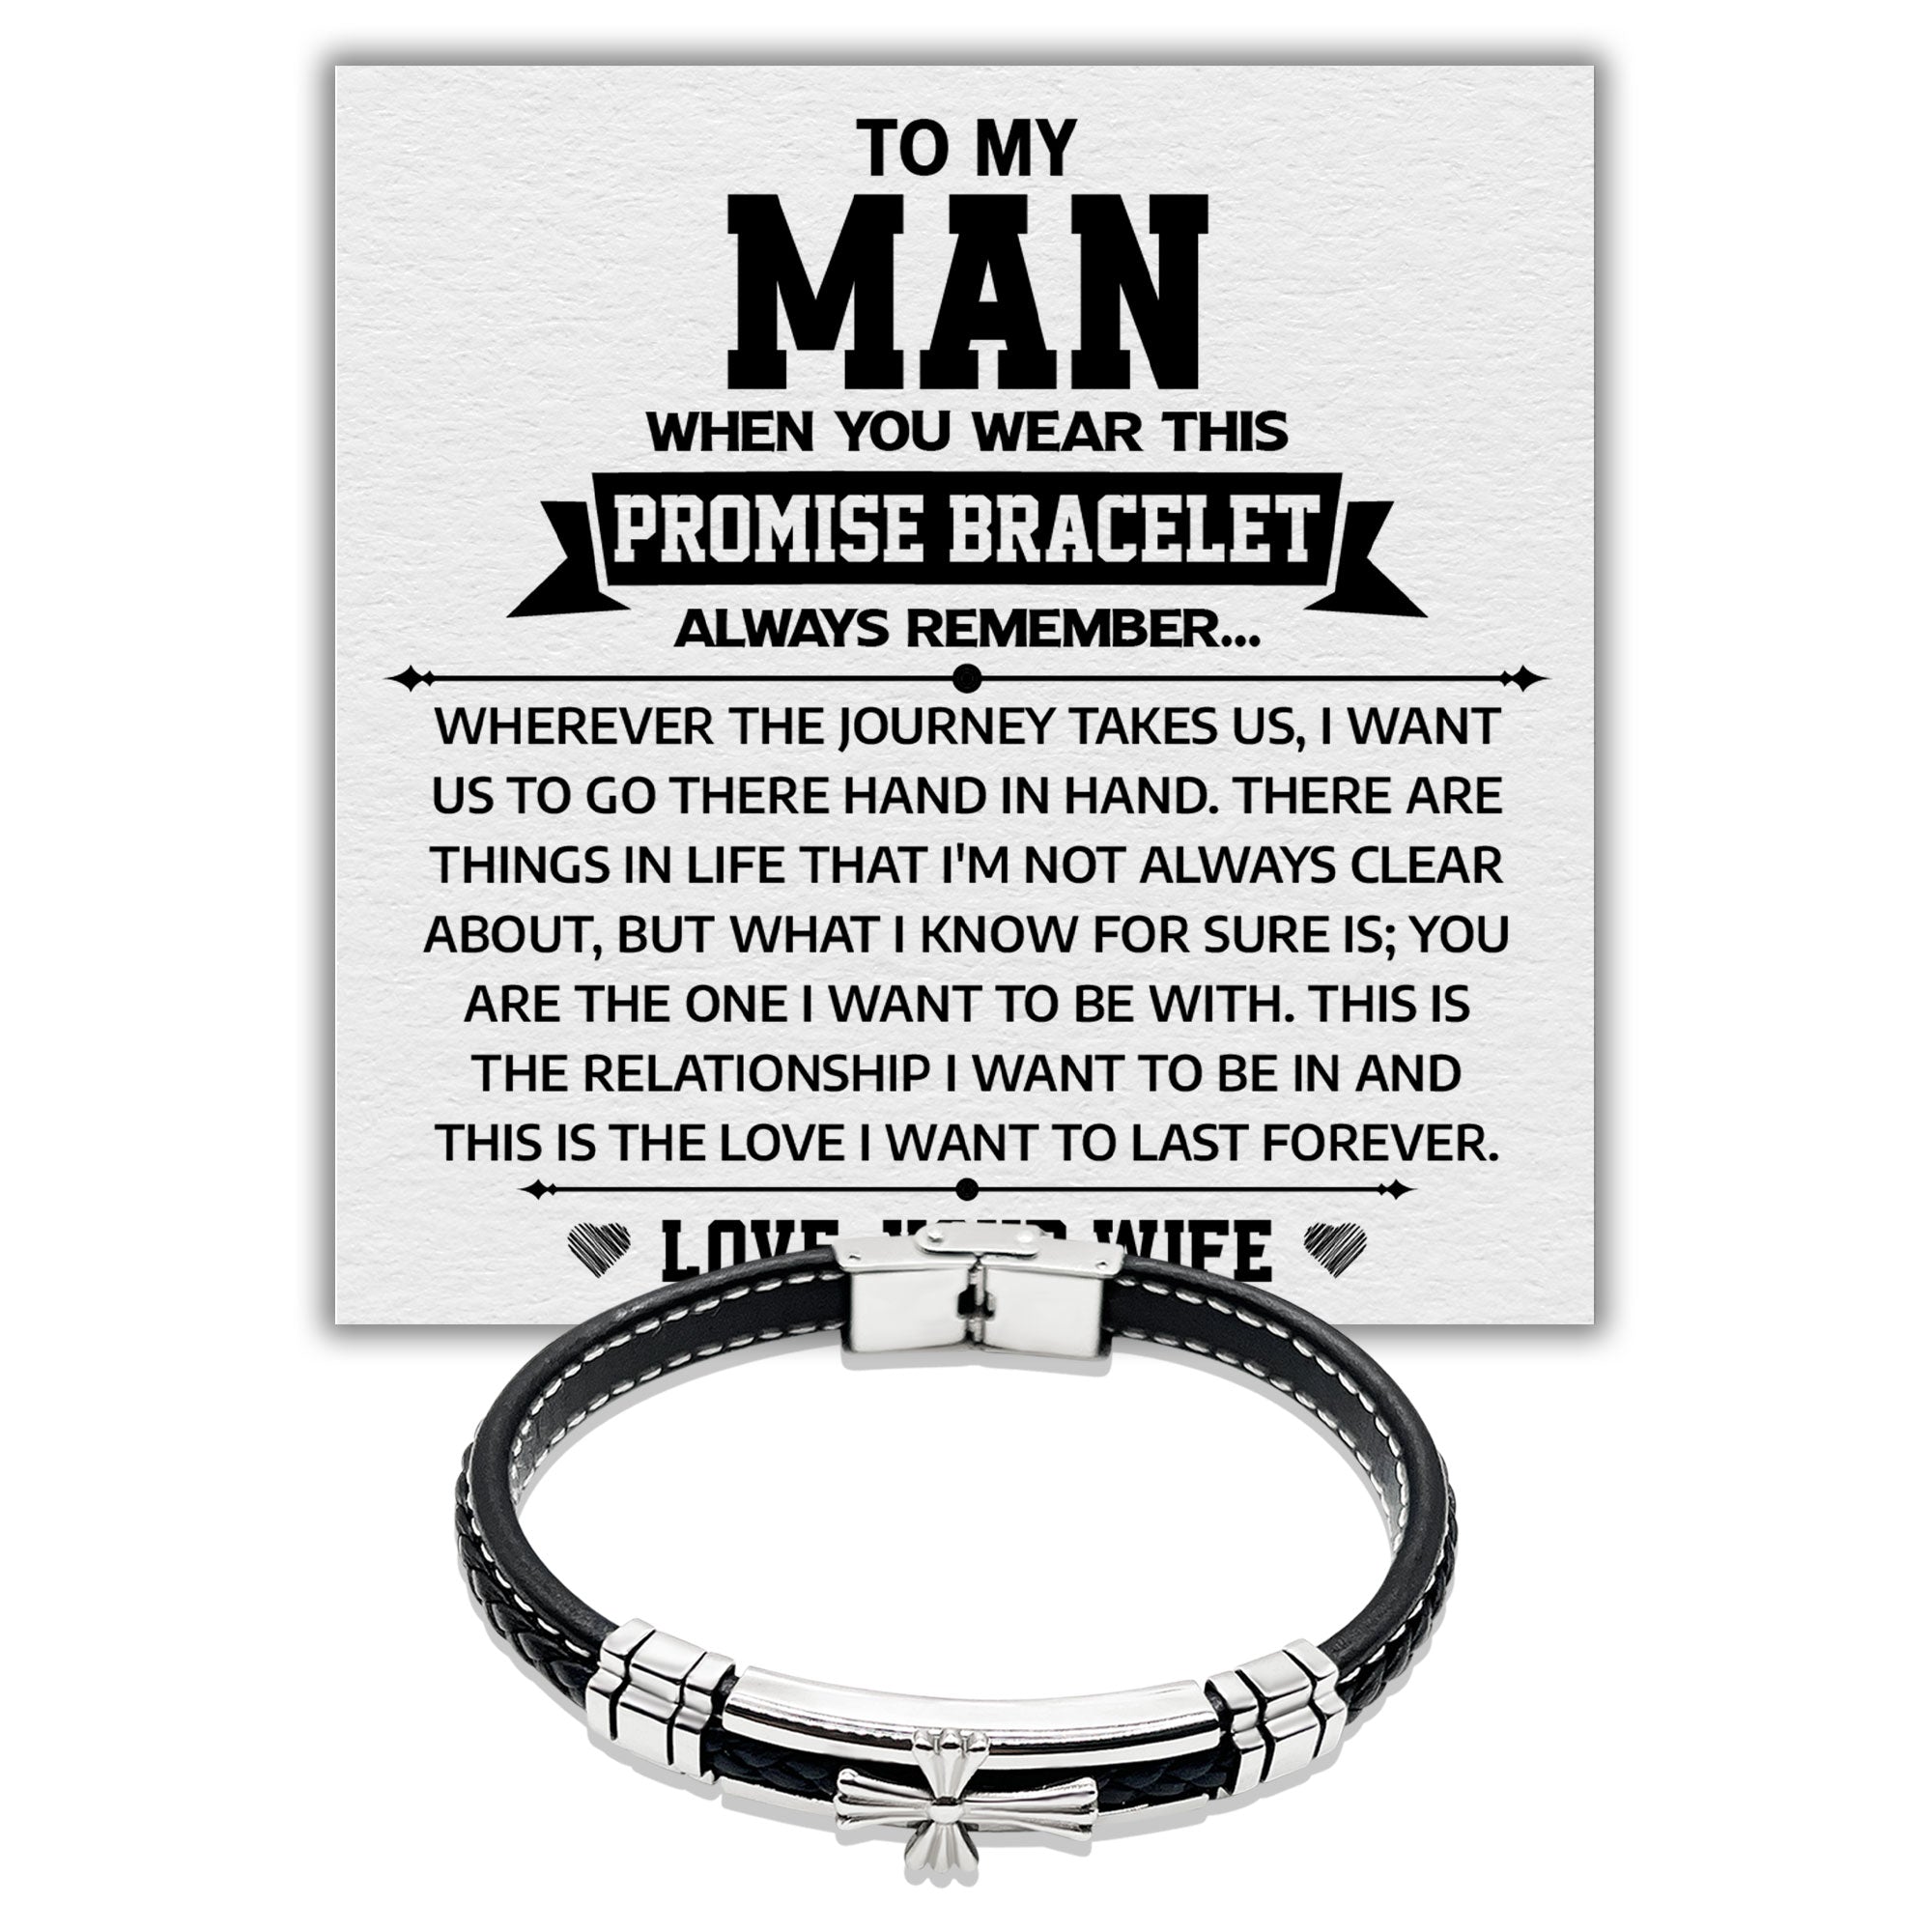 To my Man Love, Your Wife - Premium Stainless Steel Celtic Cross Black Italian Leather Bracelet